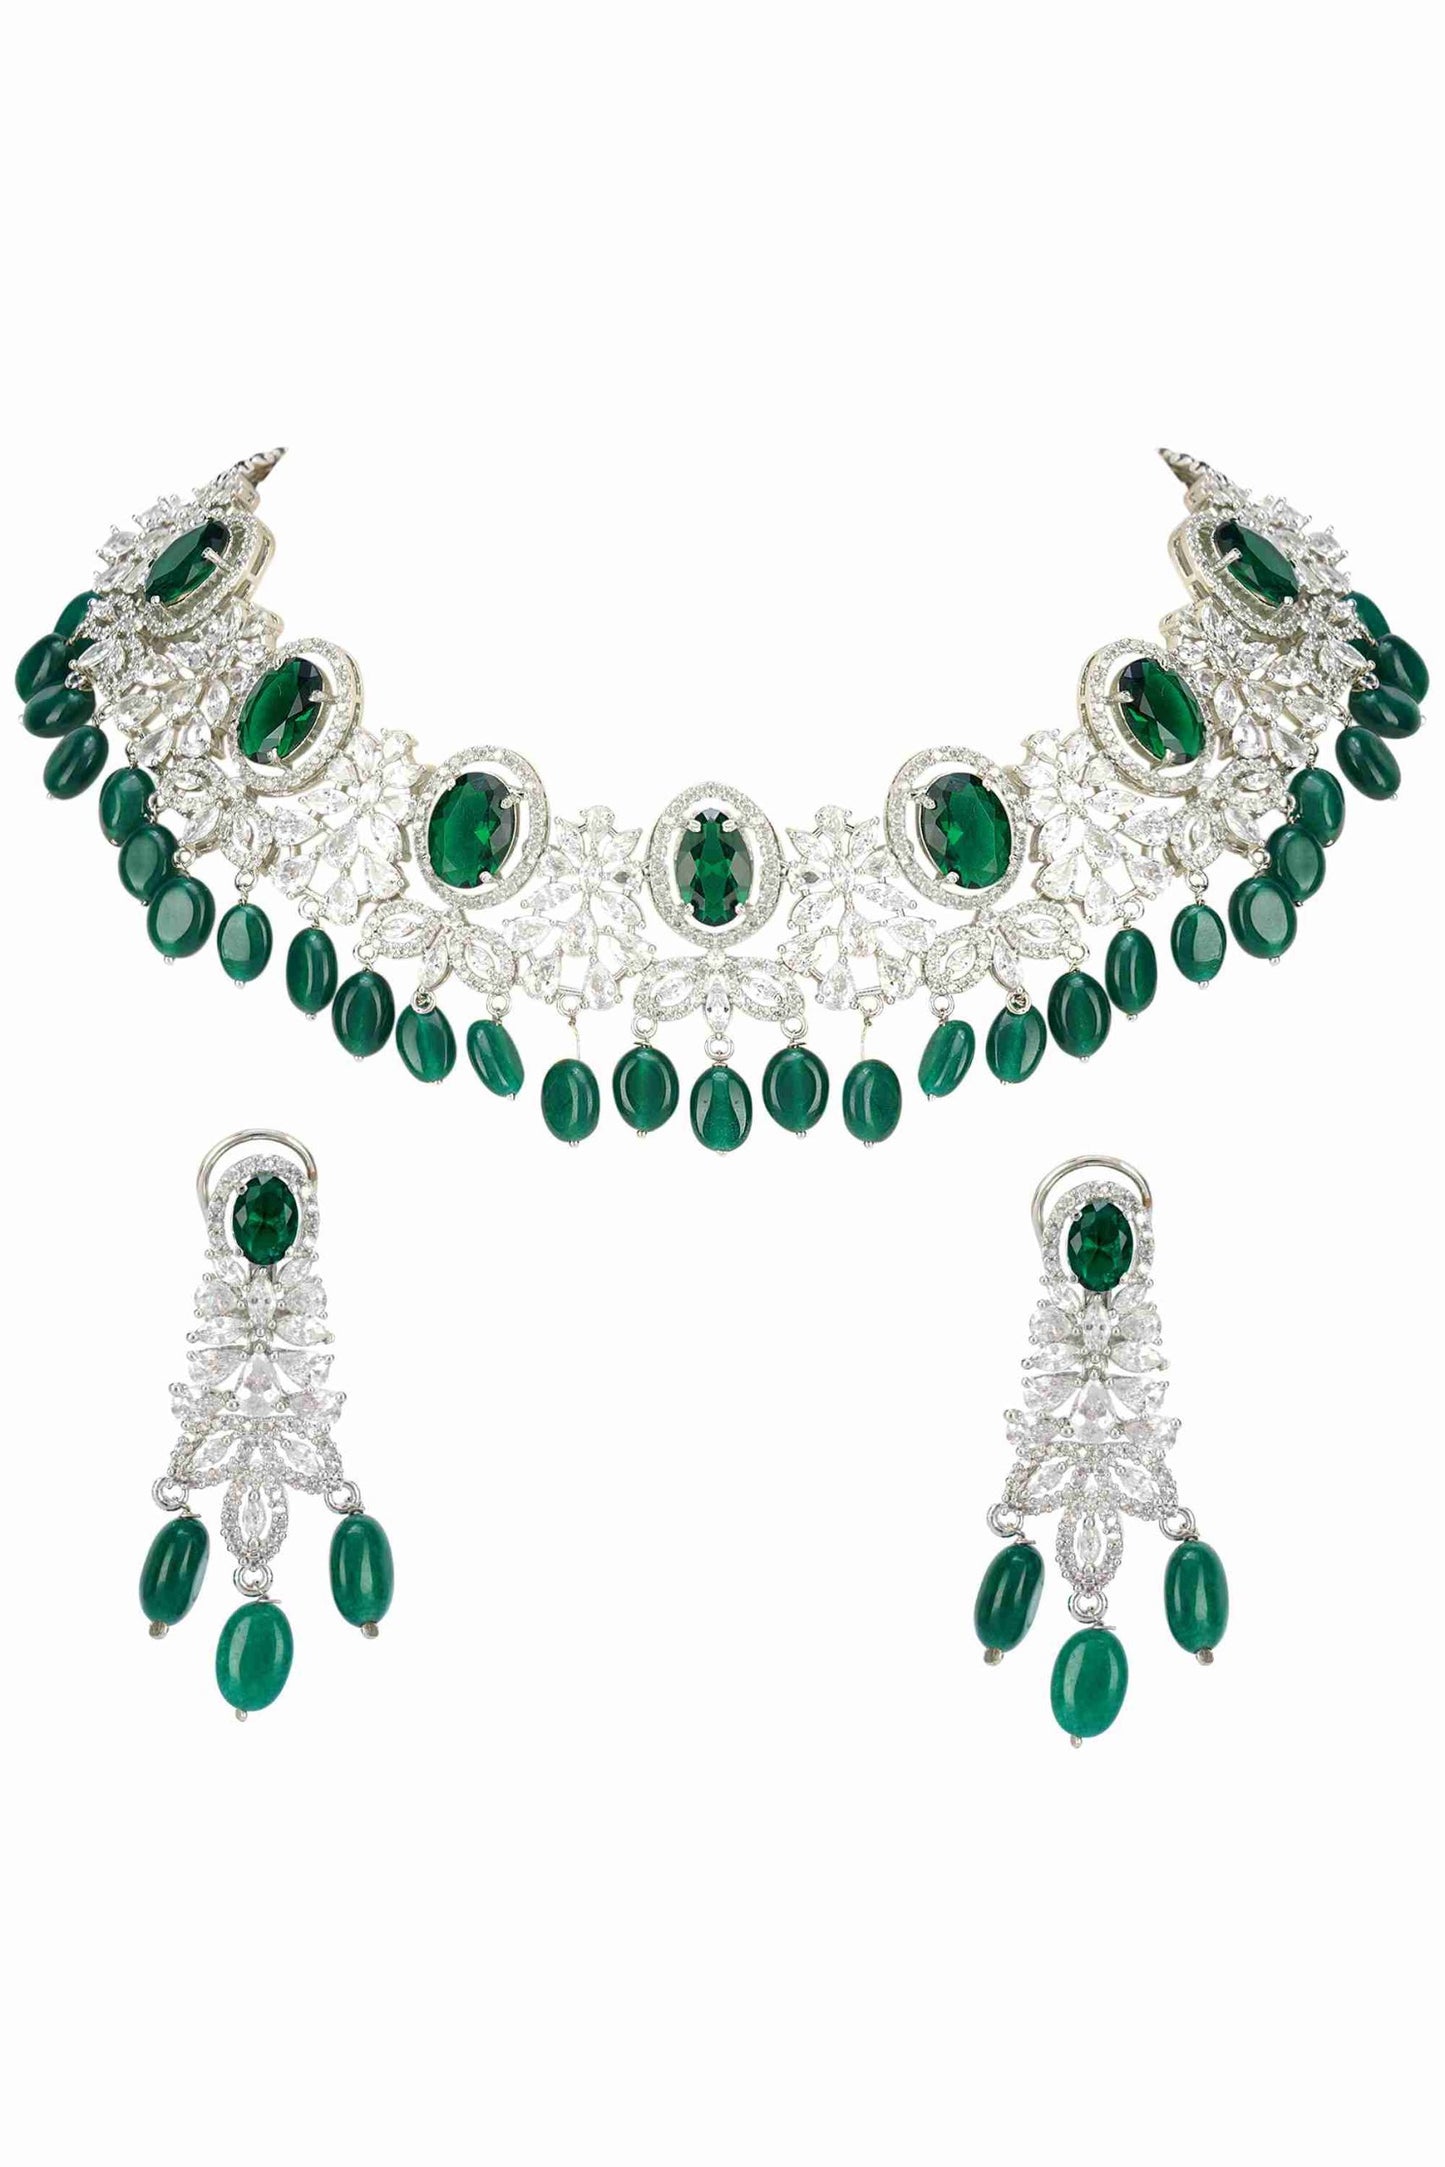 Enchanting Rhodium Finish Diamond Necklace set